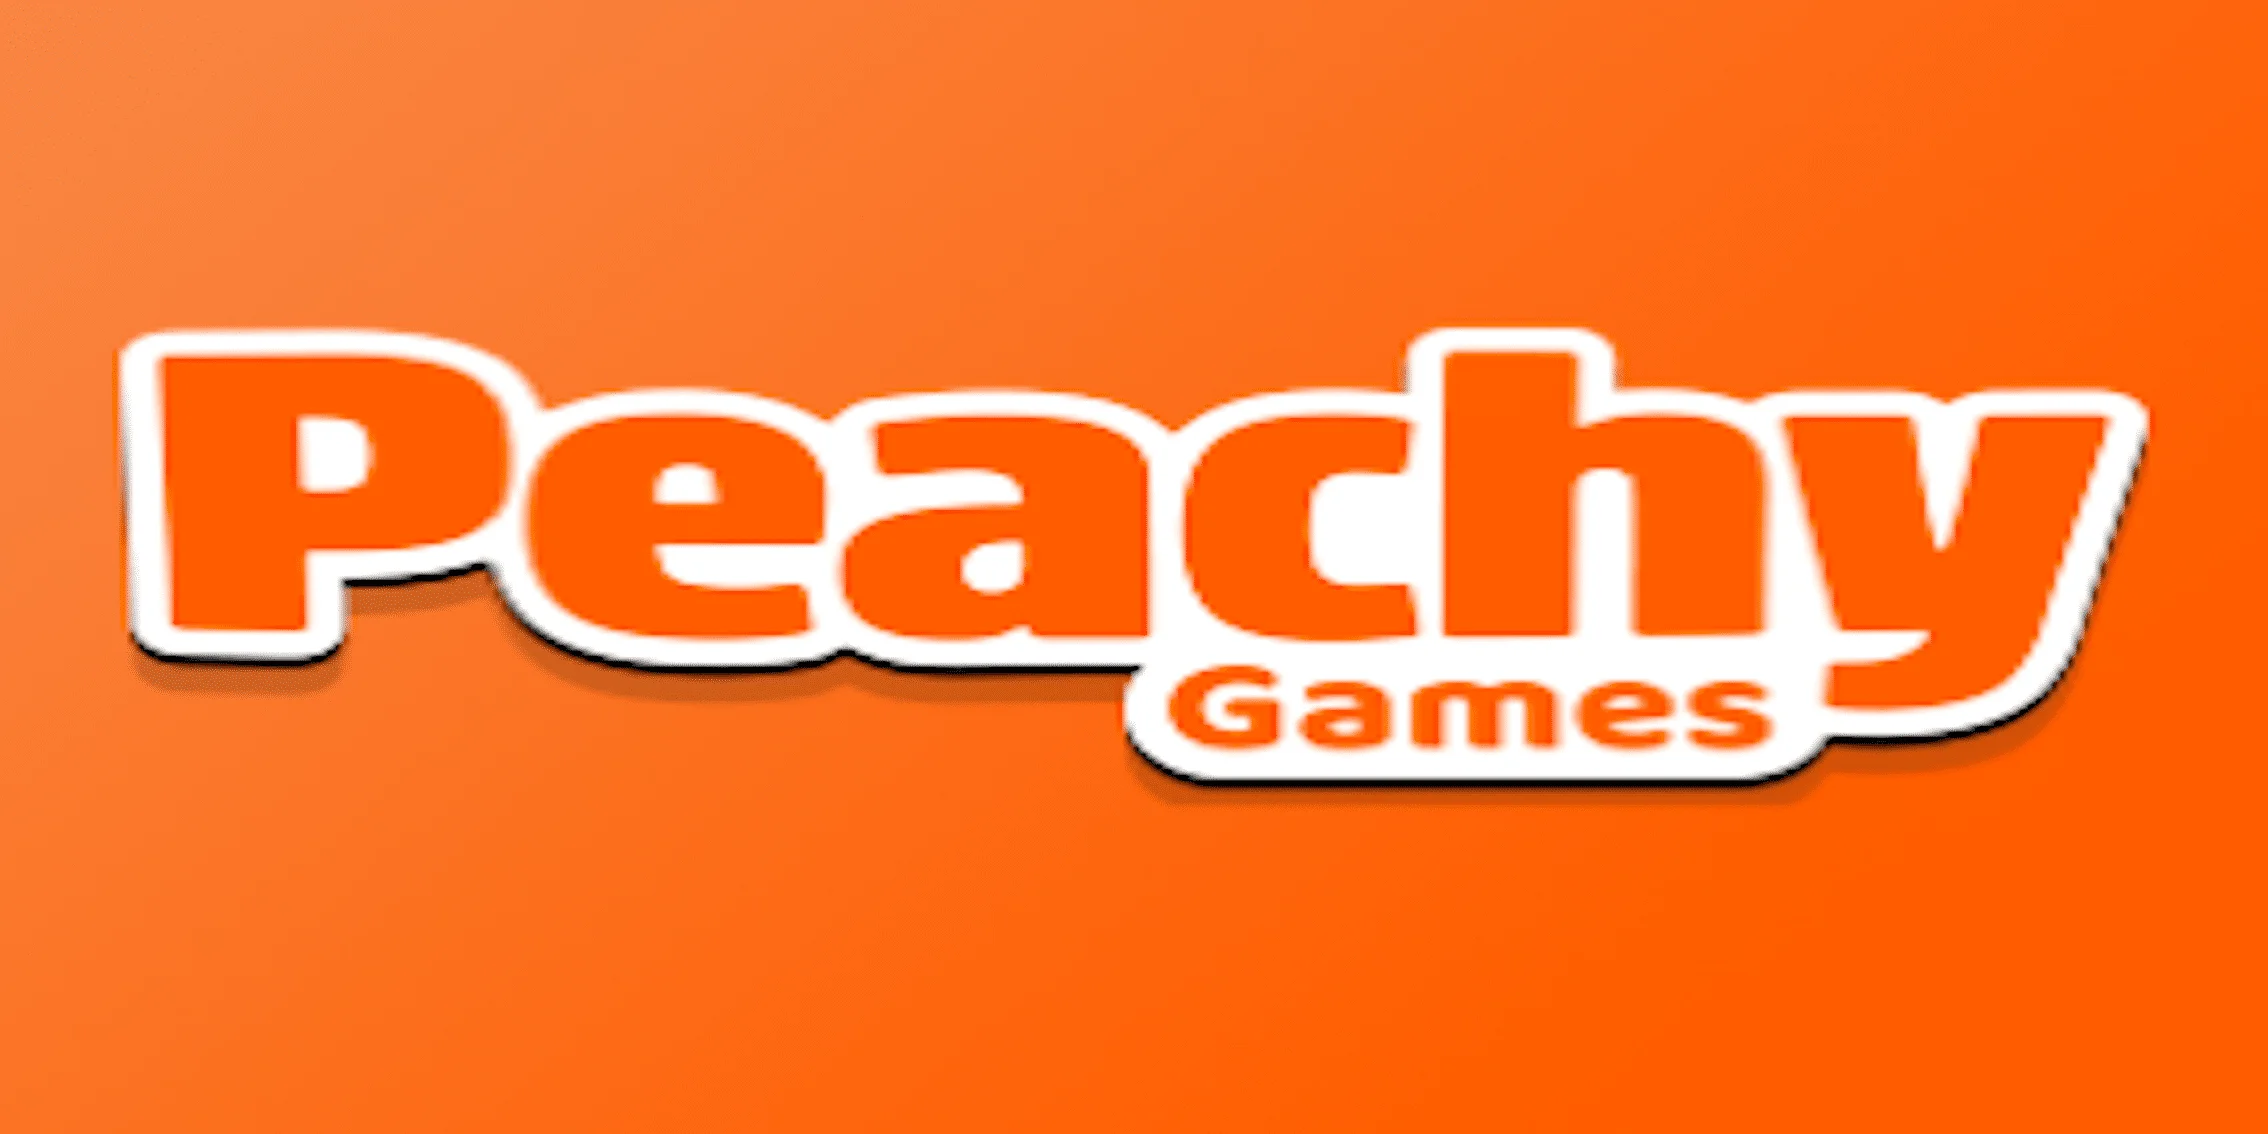 Peachy Games Casino Review